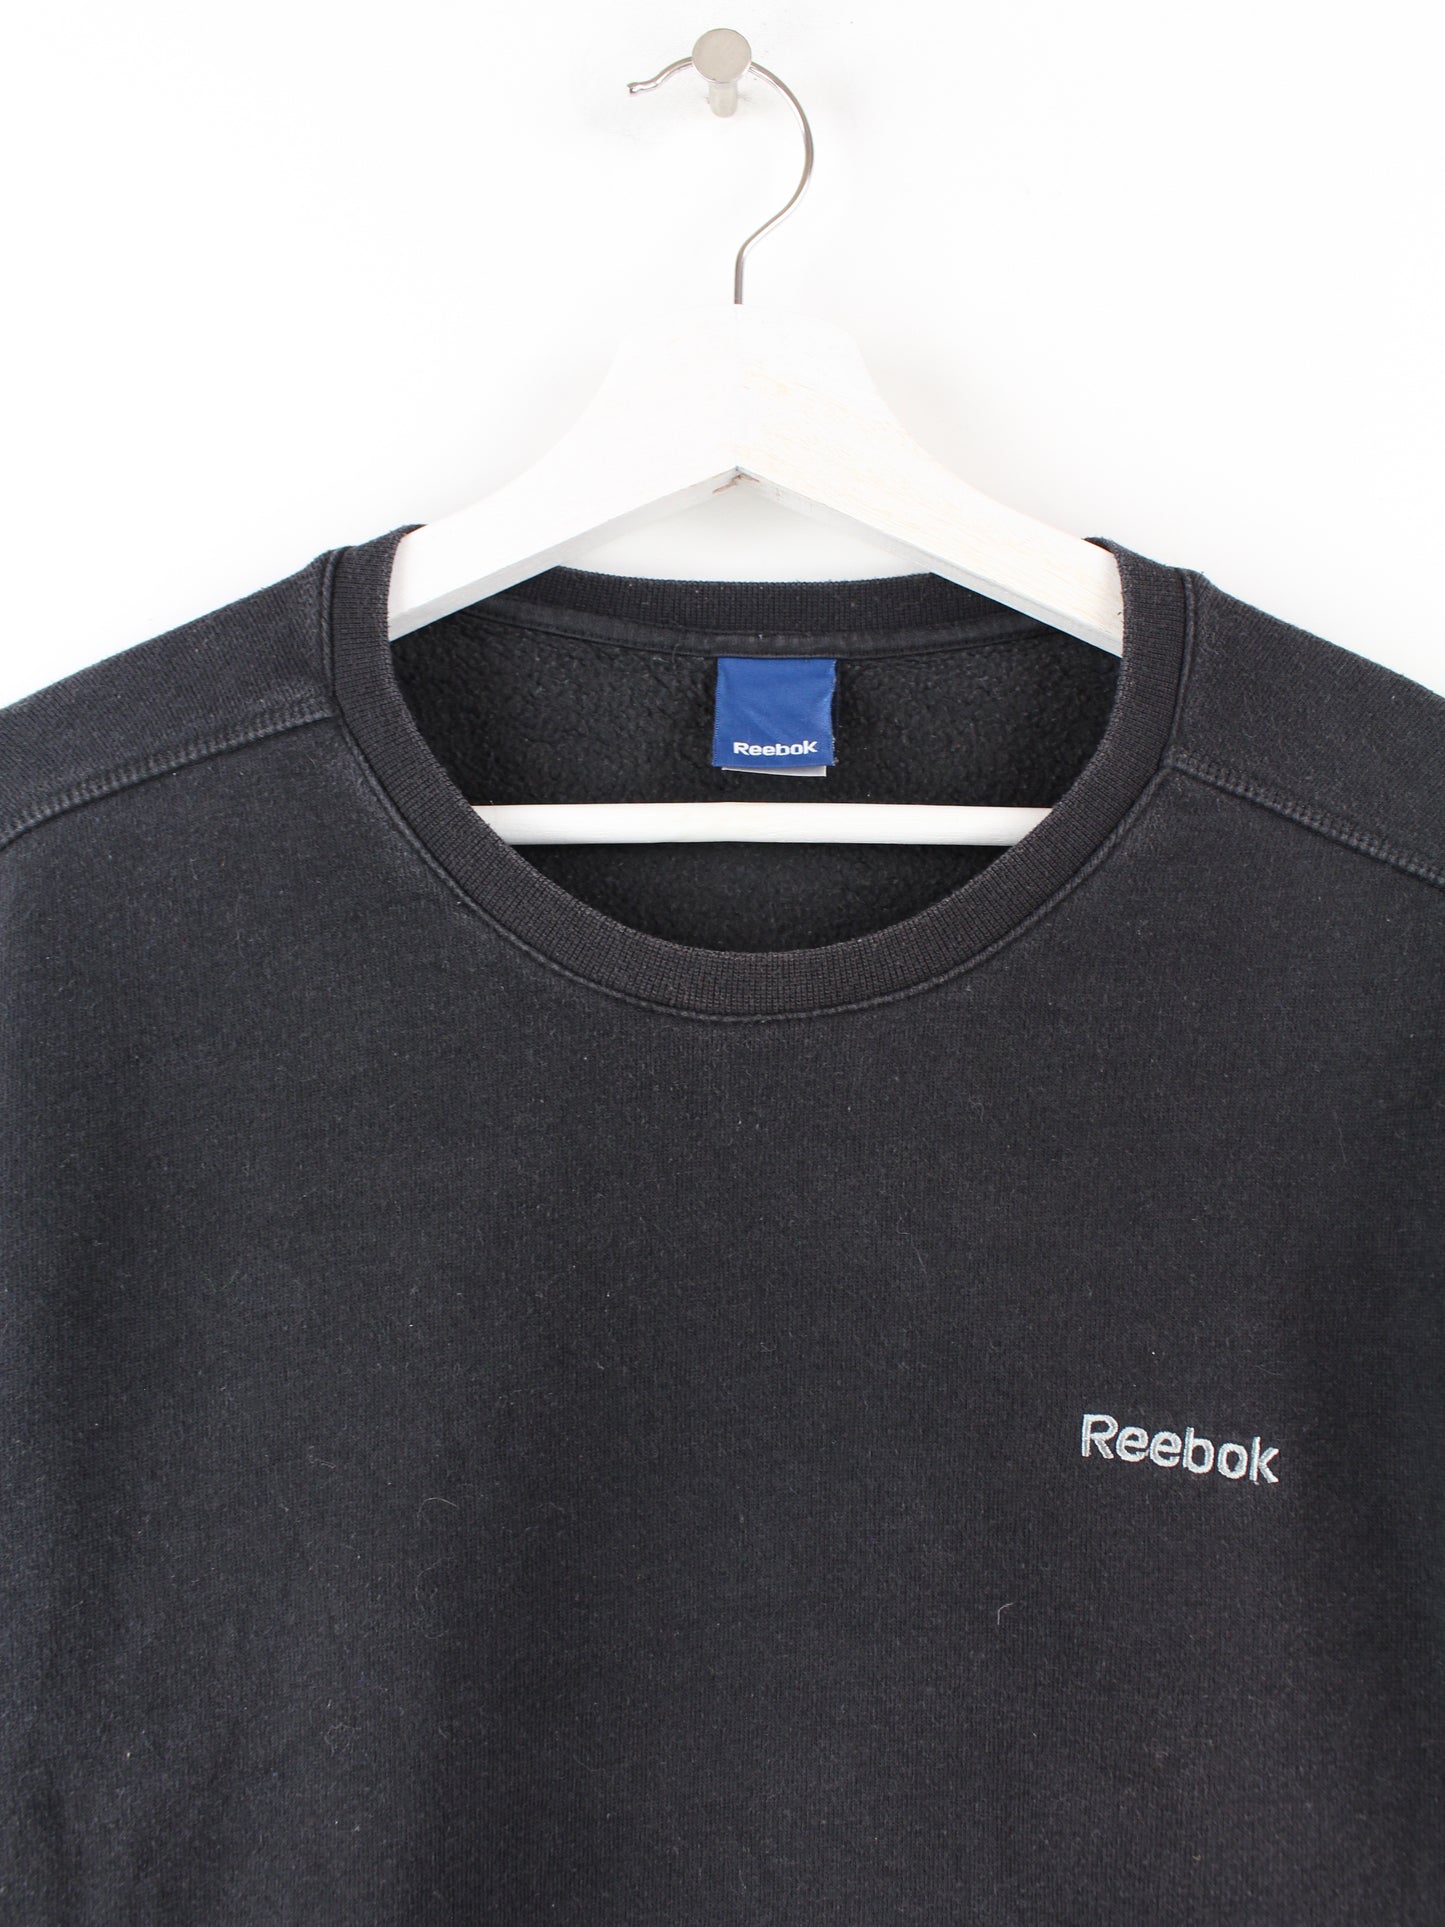 Reebok Basic Sweater Schwarz S